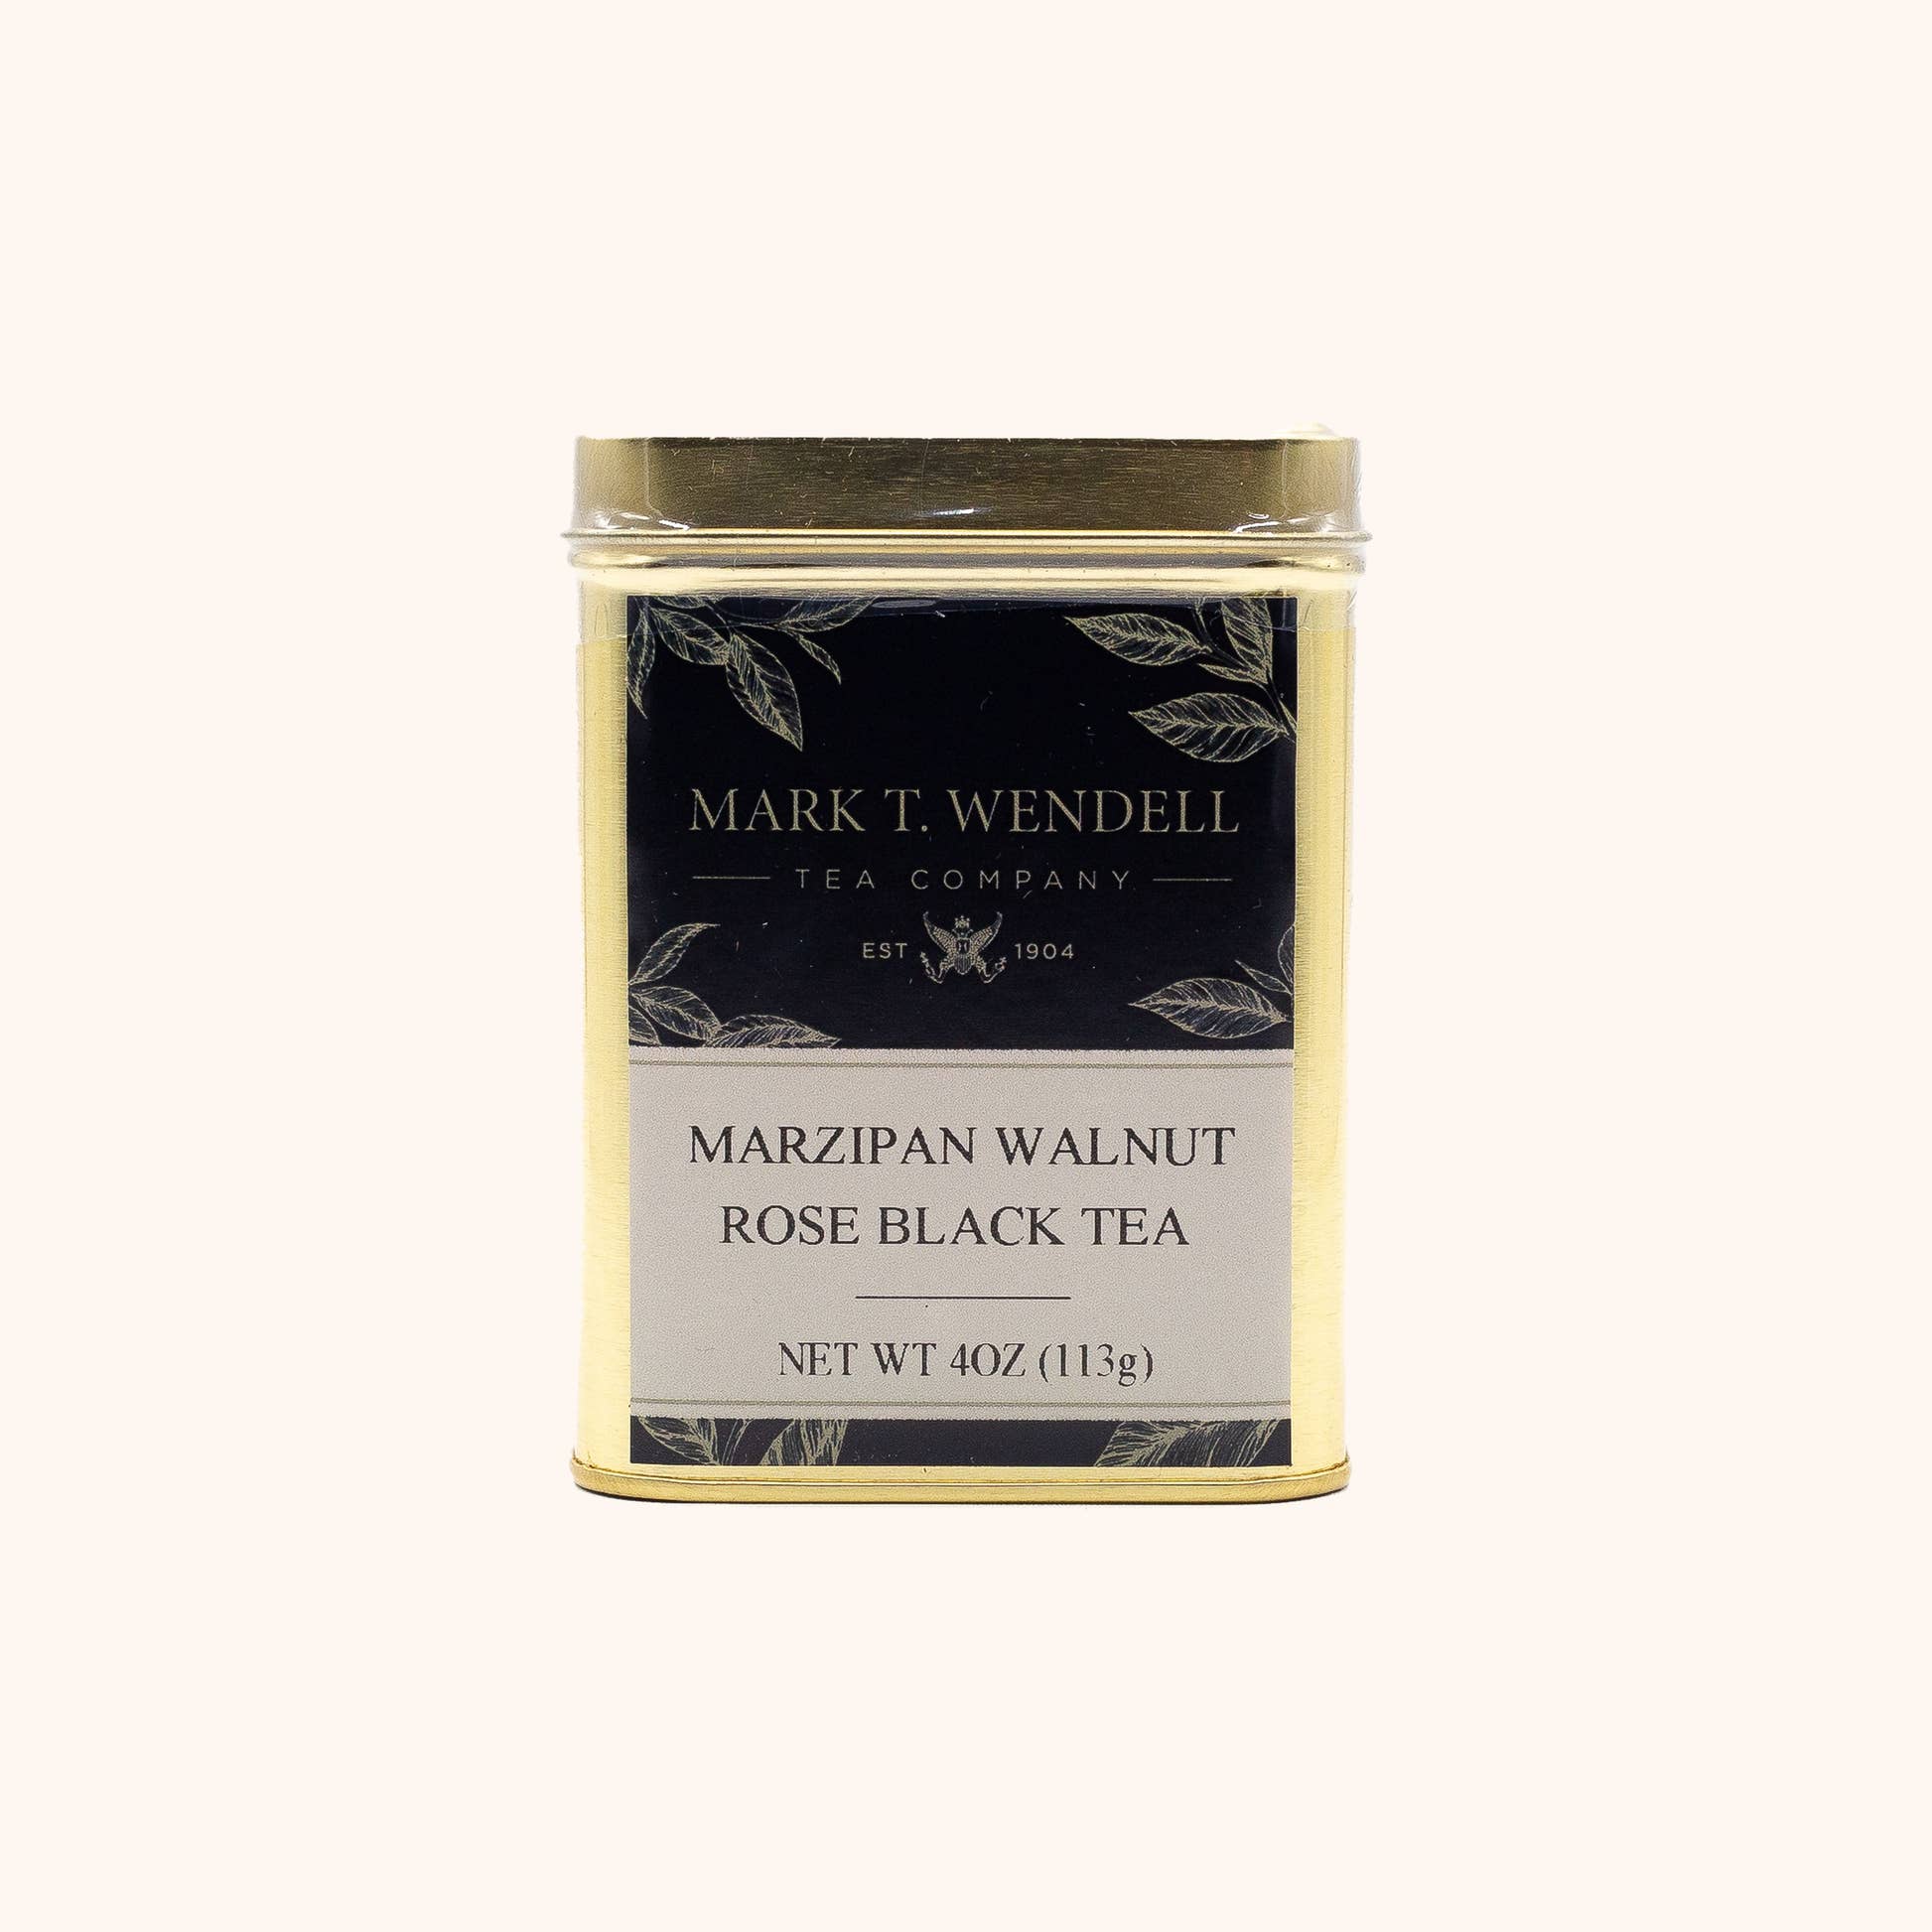 Marzipan Walnut Rose Black Tea by Mark T. Wendell Tea Company loose leaf tea tin